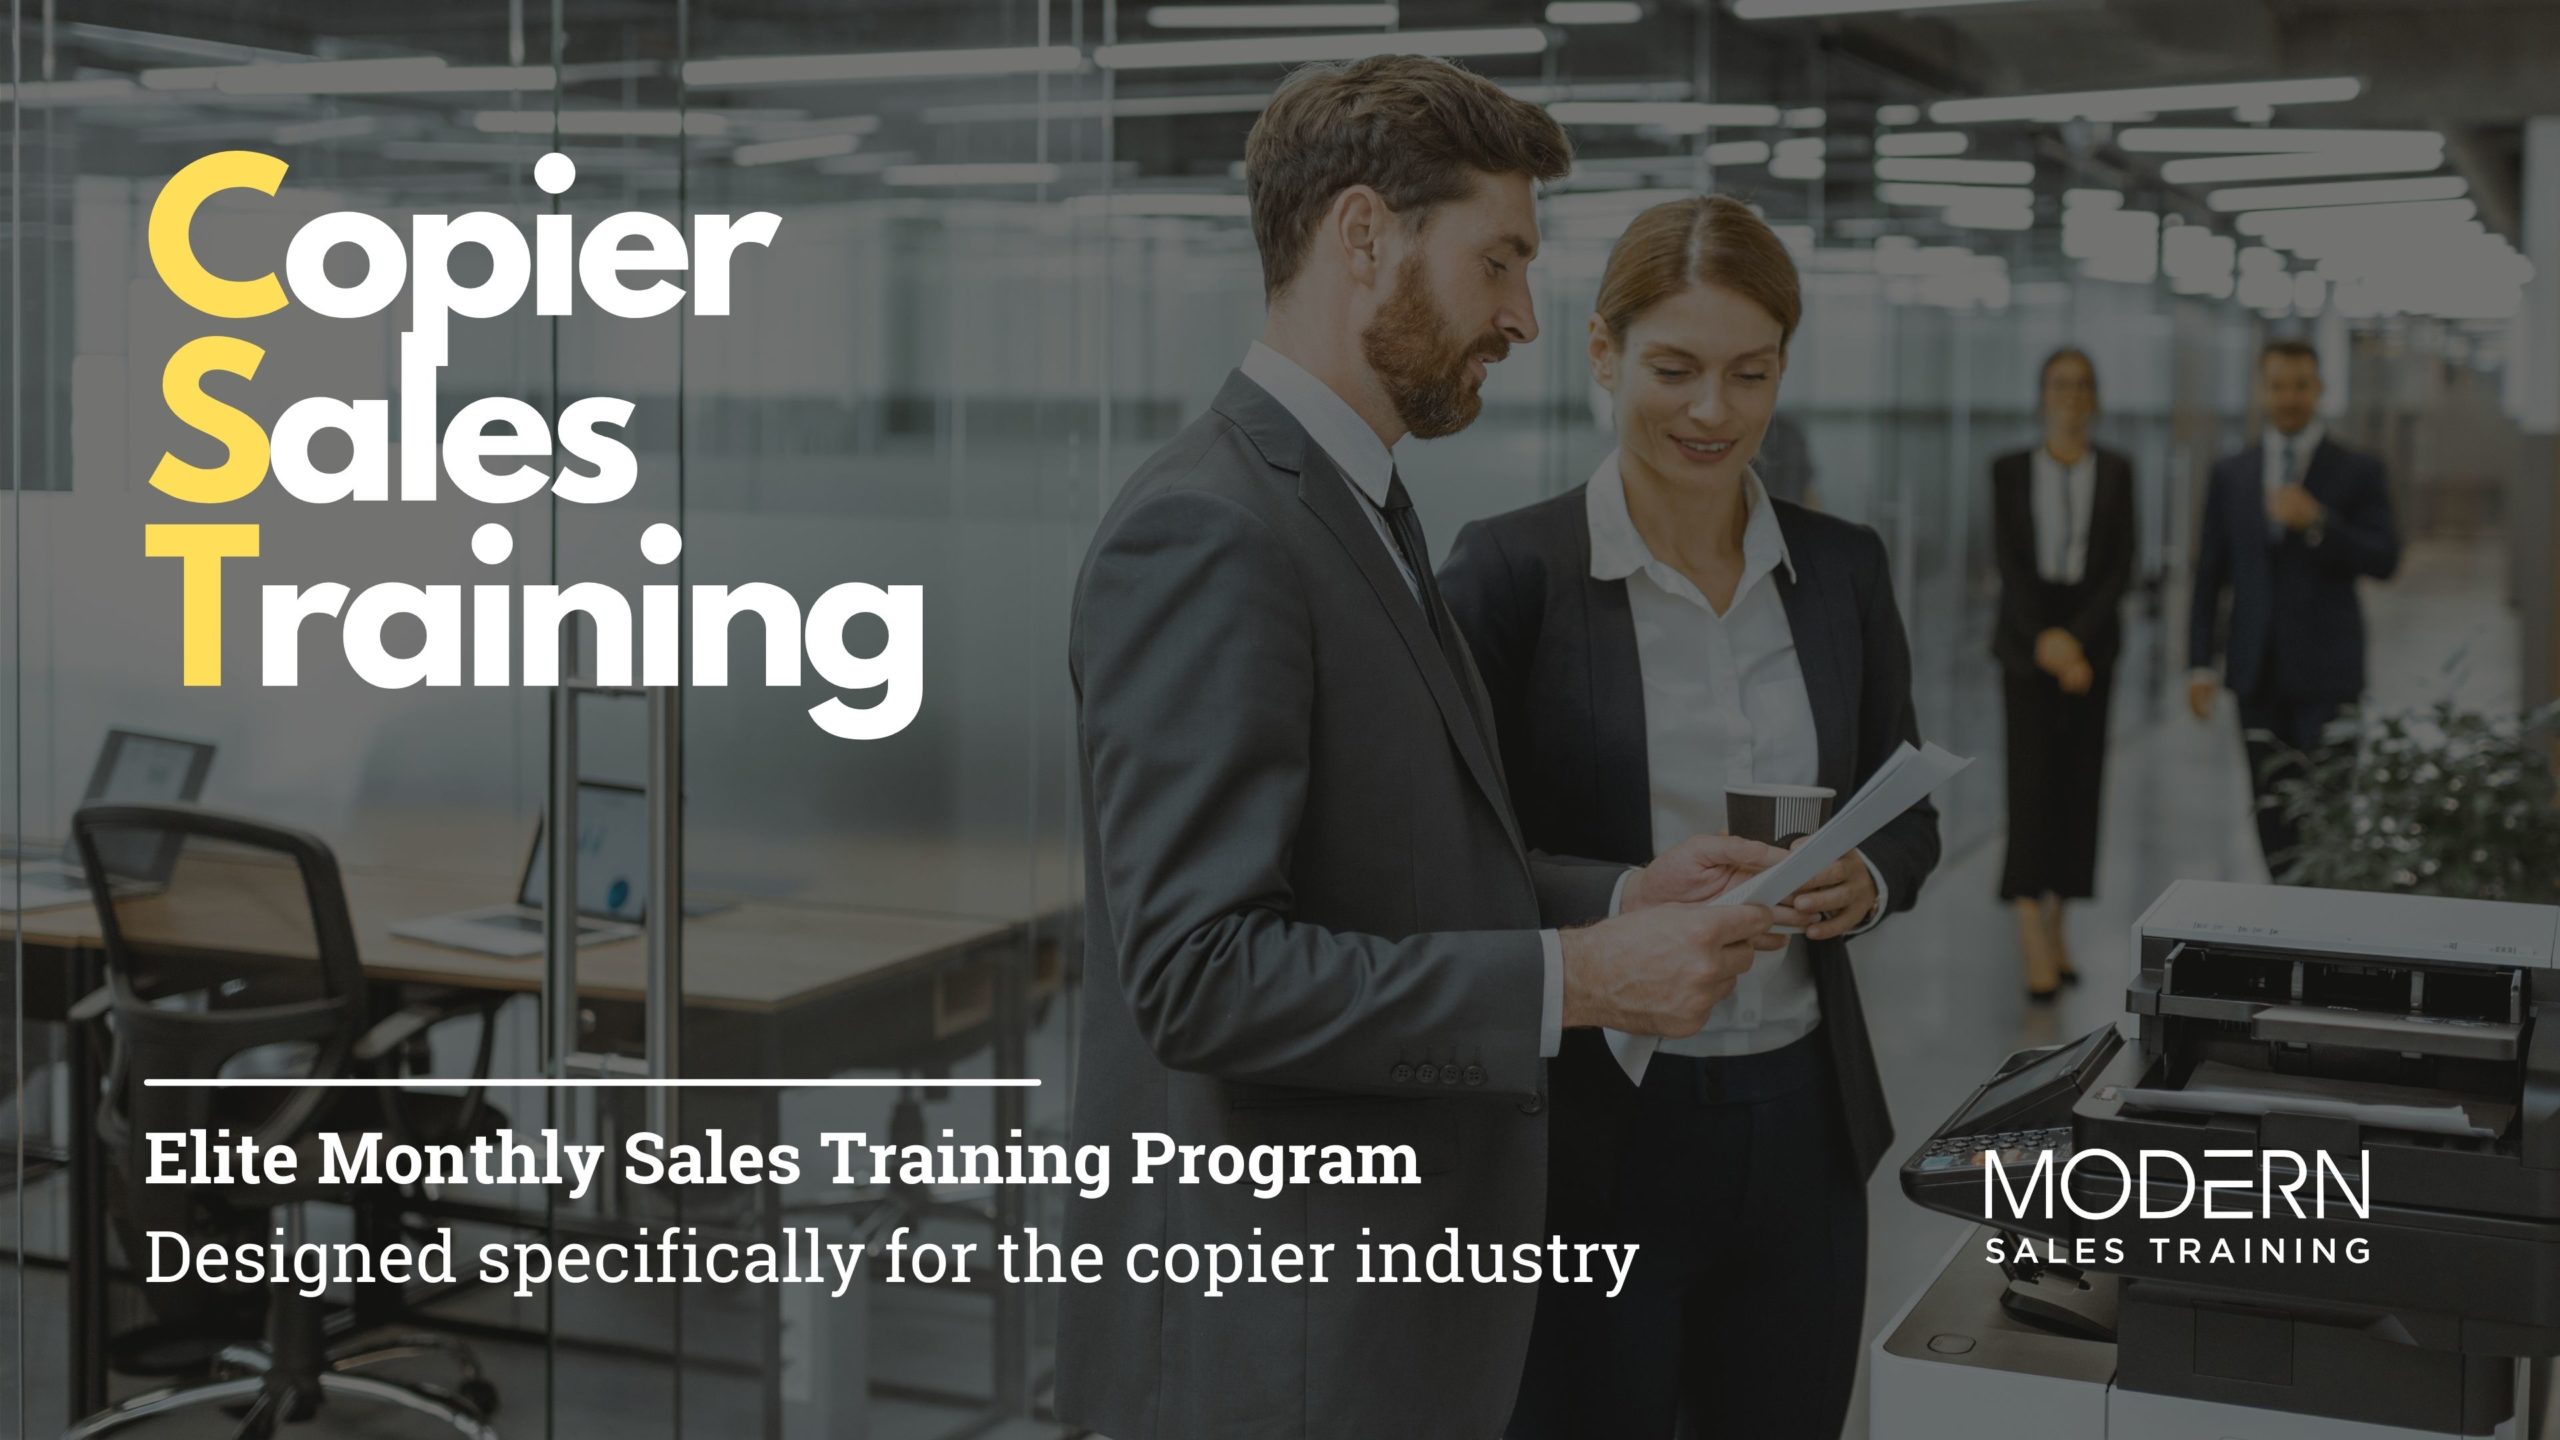 Copier Sales Training by Modern Sales Training